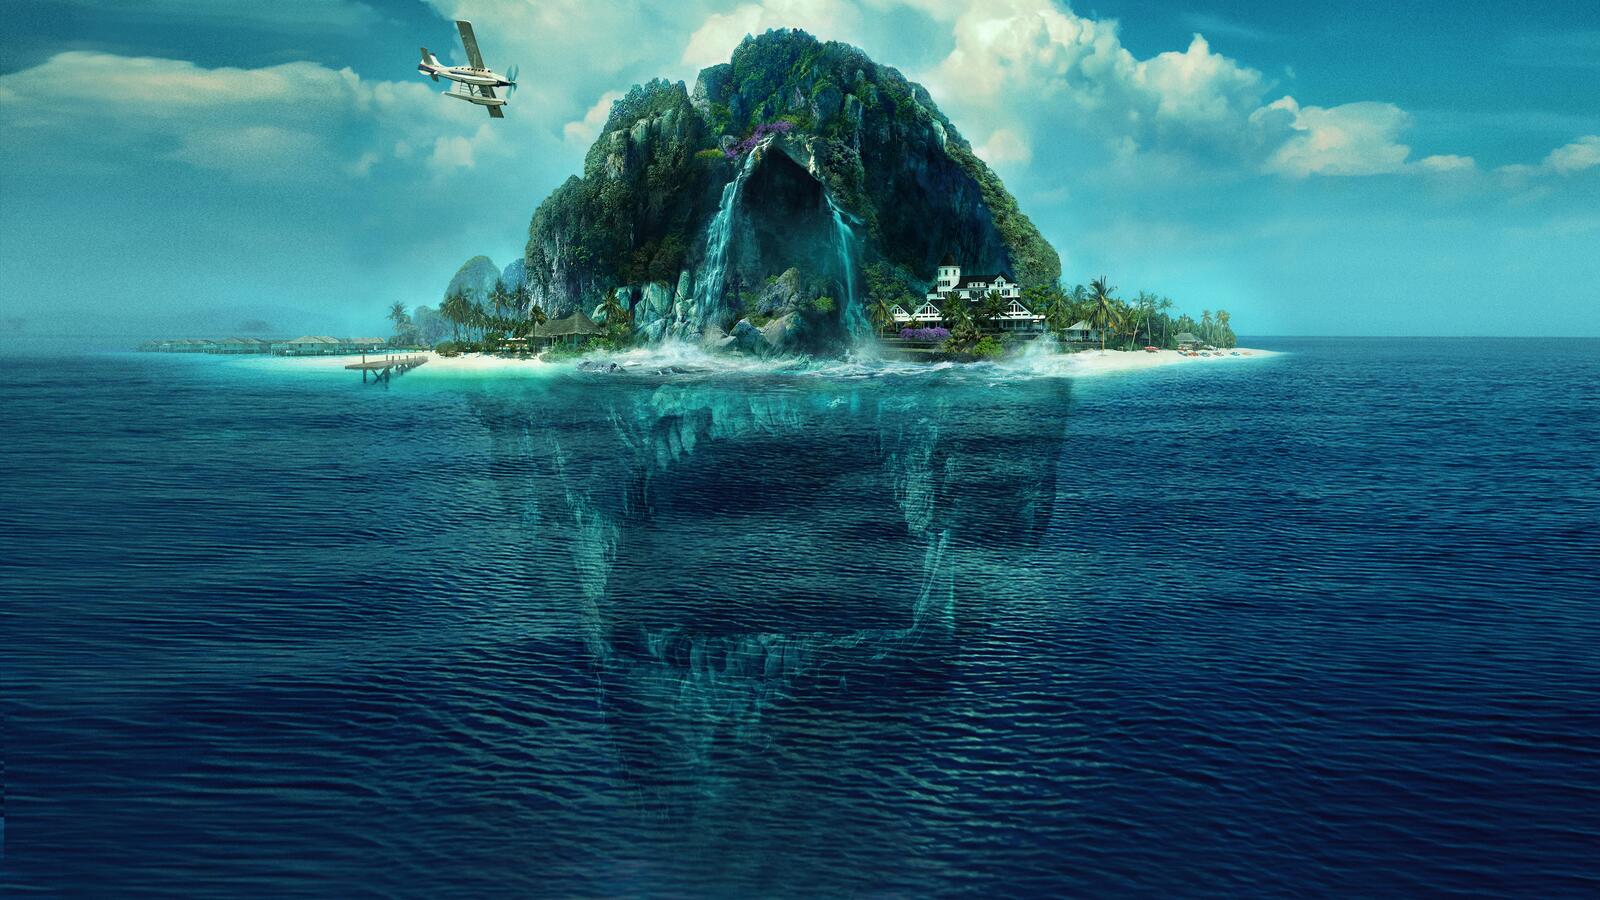 Wallpapers ocean airplane fantasy island 2020 on the desktop